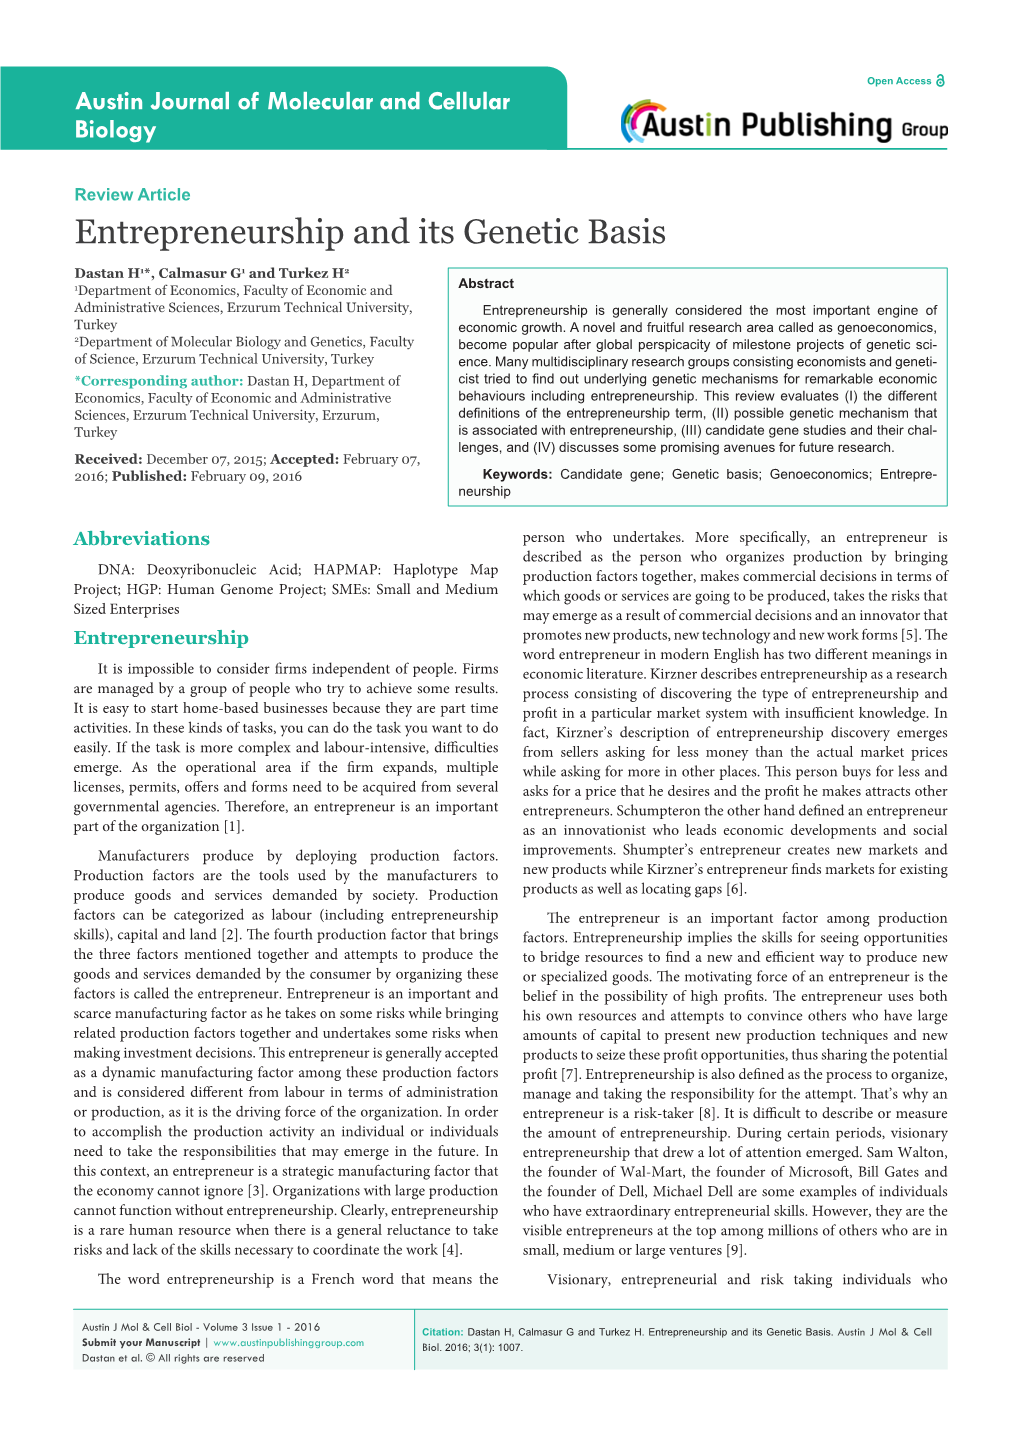 Entrepreneurship and Its Genetic Basis